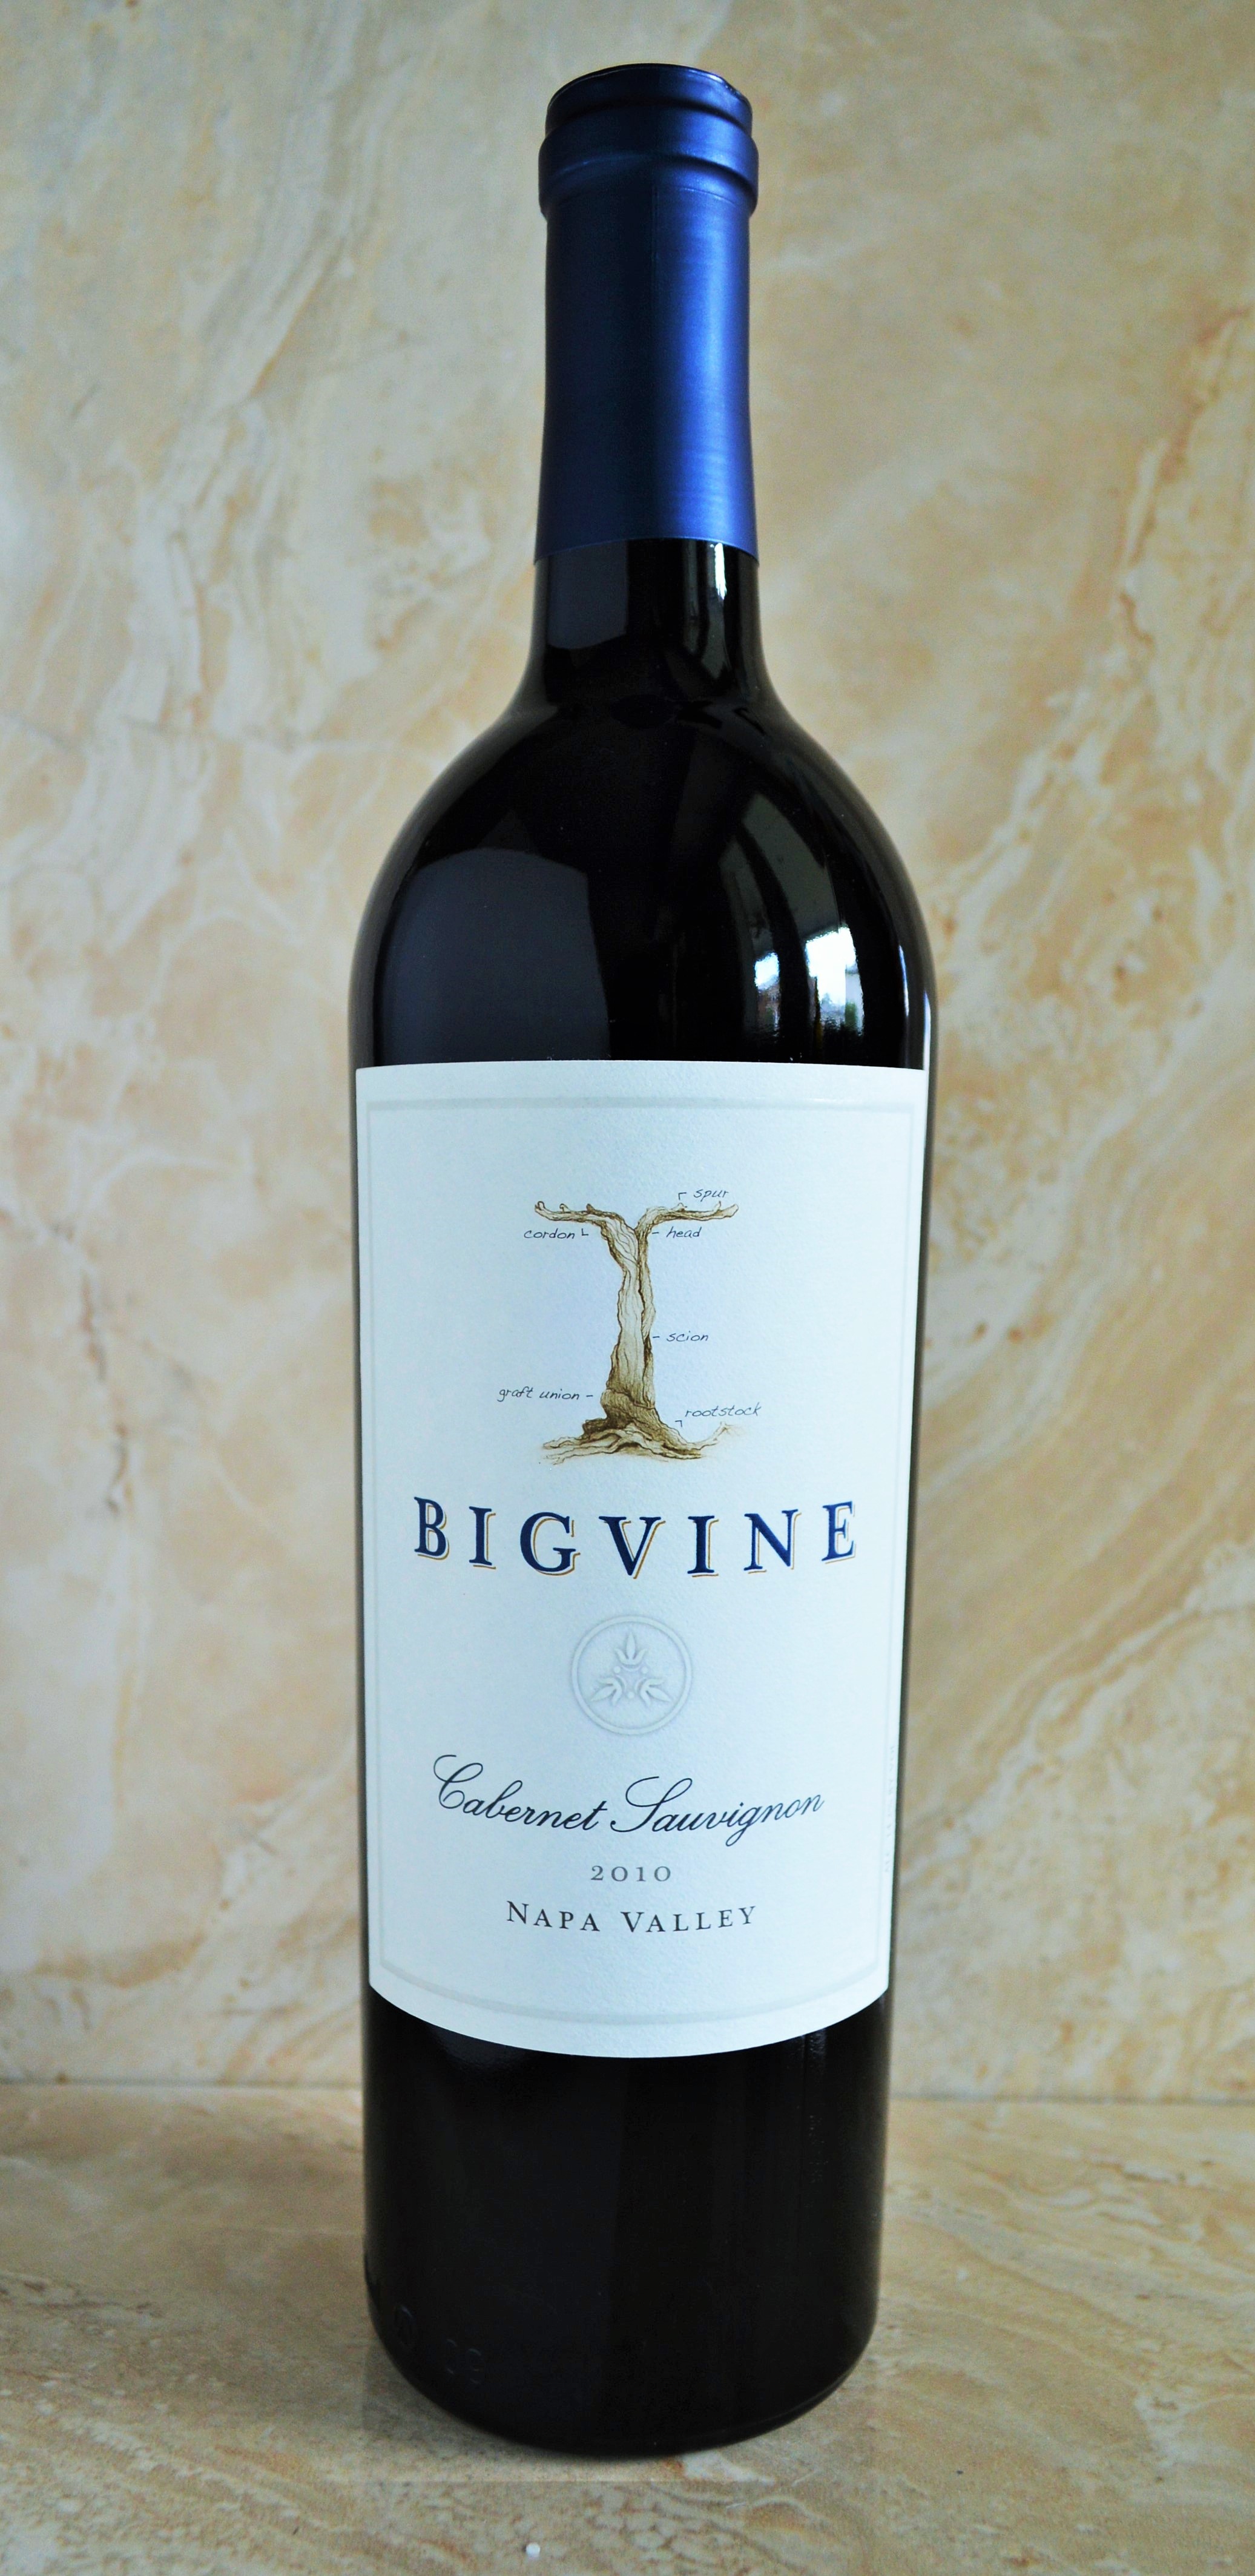 Big Vine Cabernet Sauvignon Review